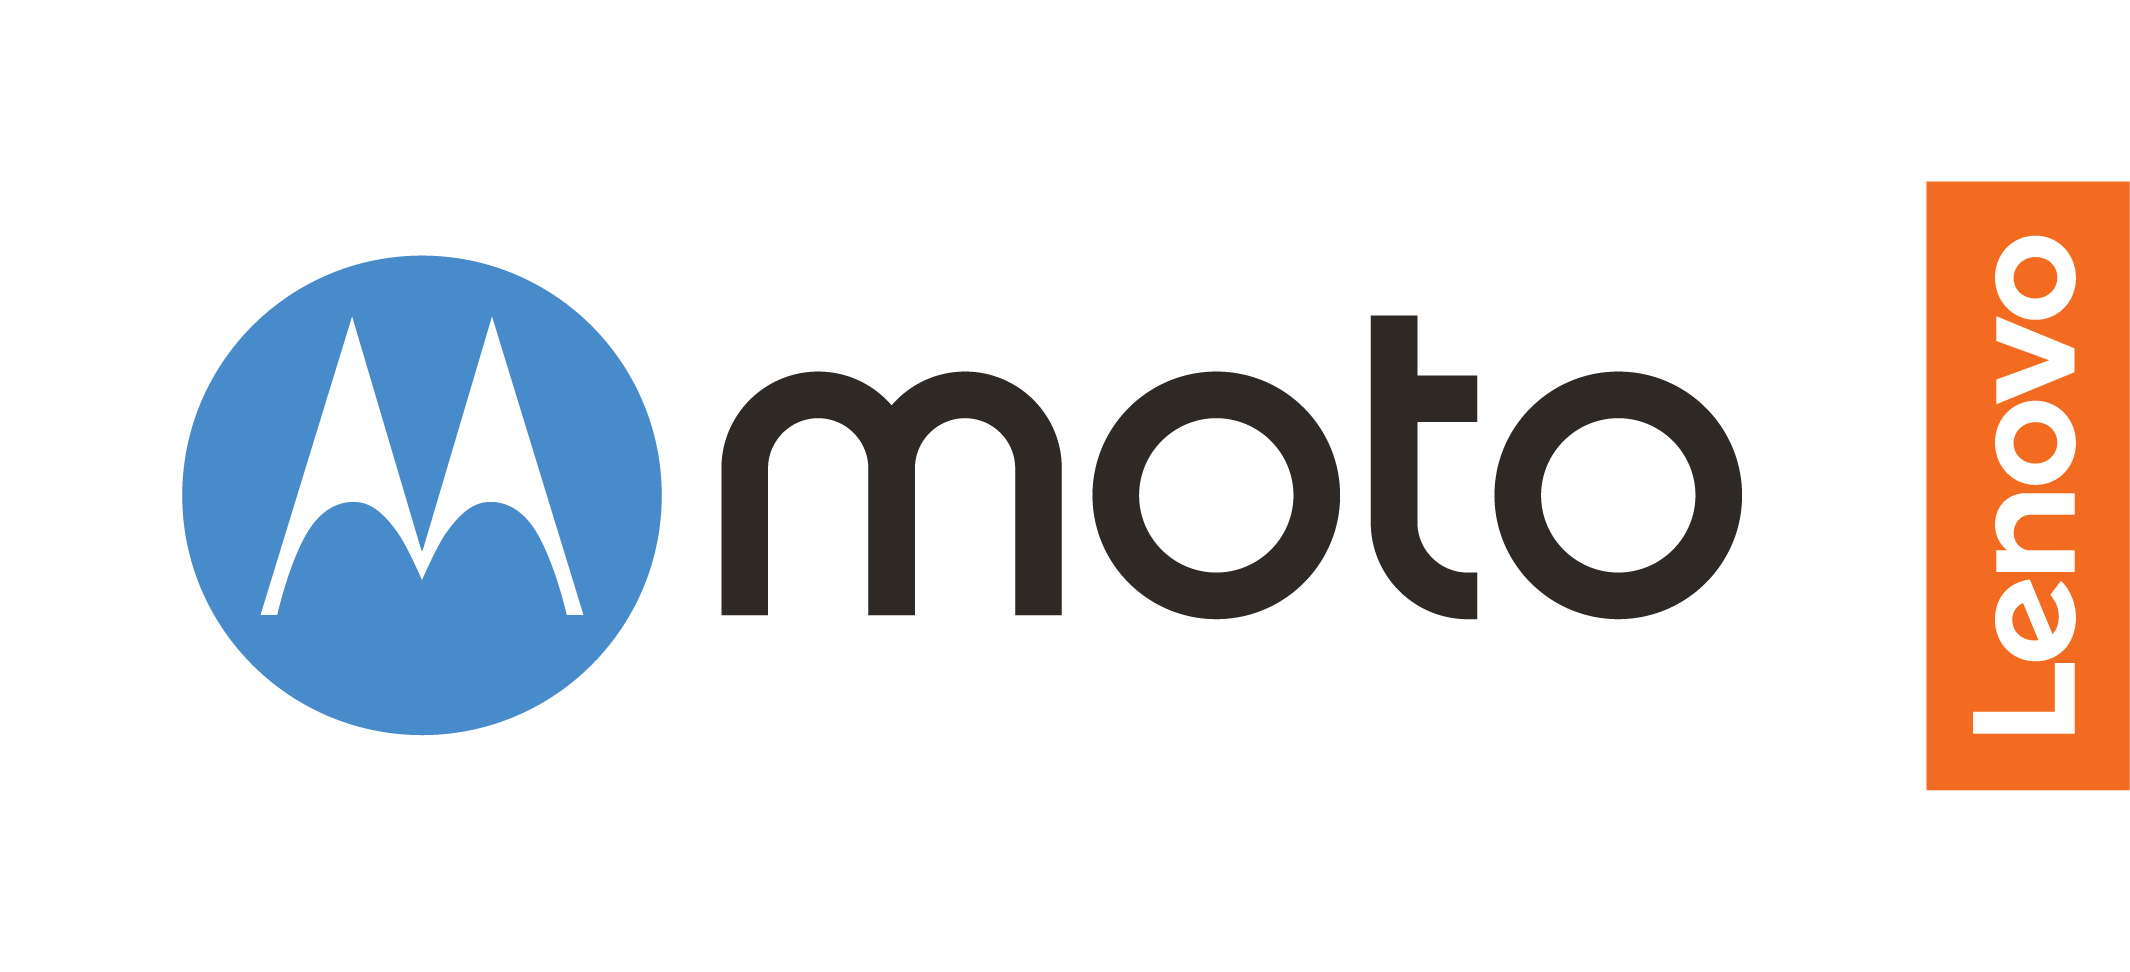 Moto Logo - Image - Moto lenovo logo 2016.png | Logopedia | FANDOM powered by Wikia